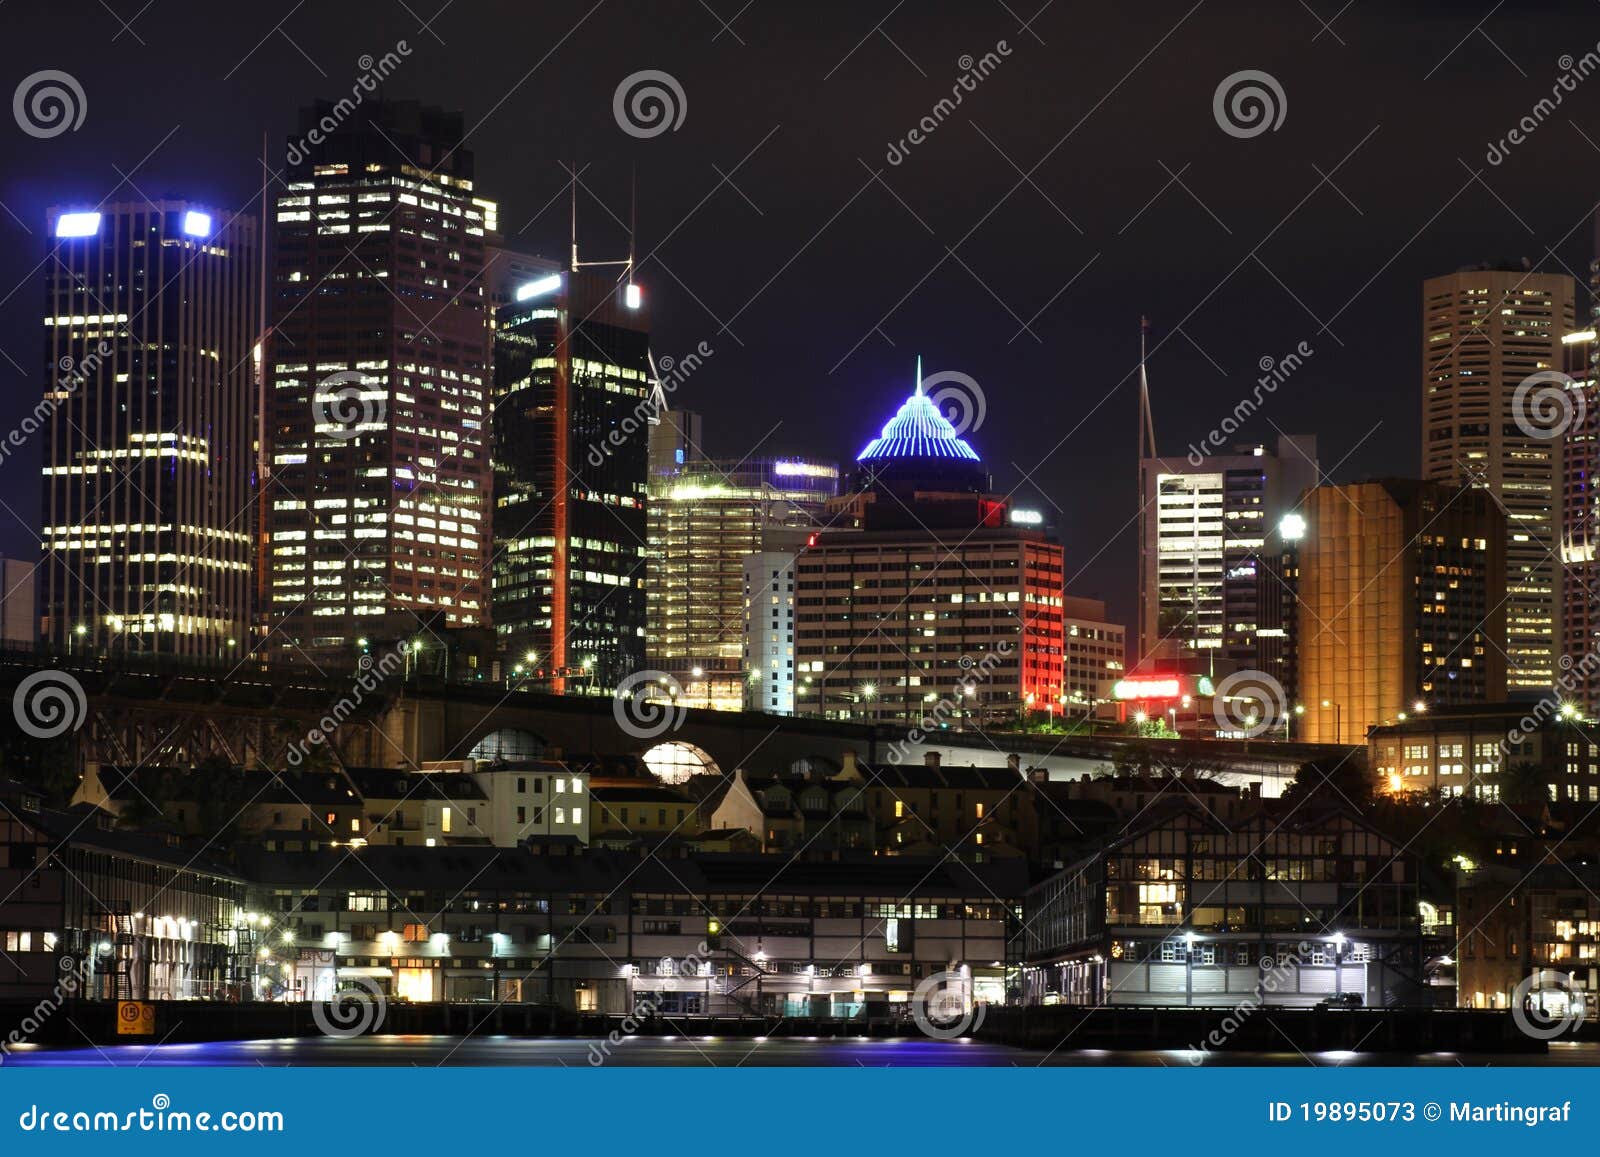 metropolitan city with wharf and skyline by night